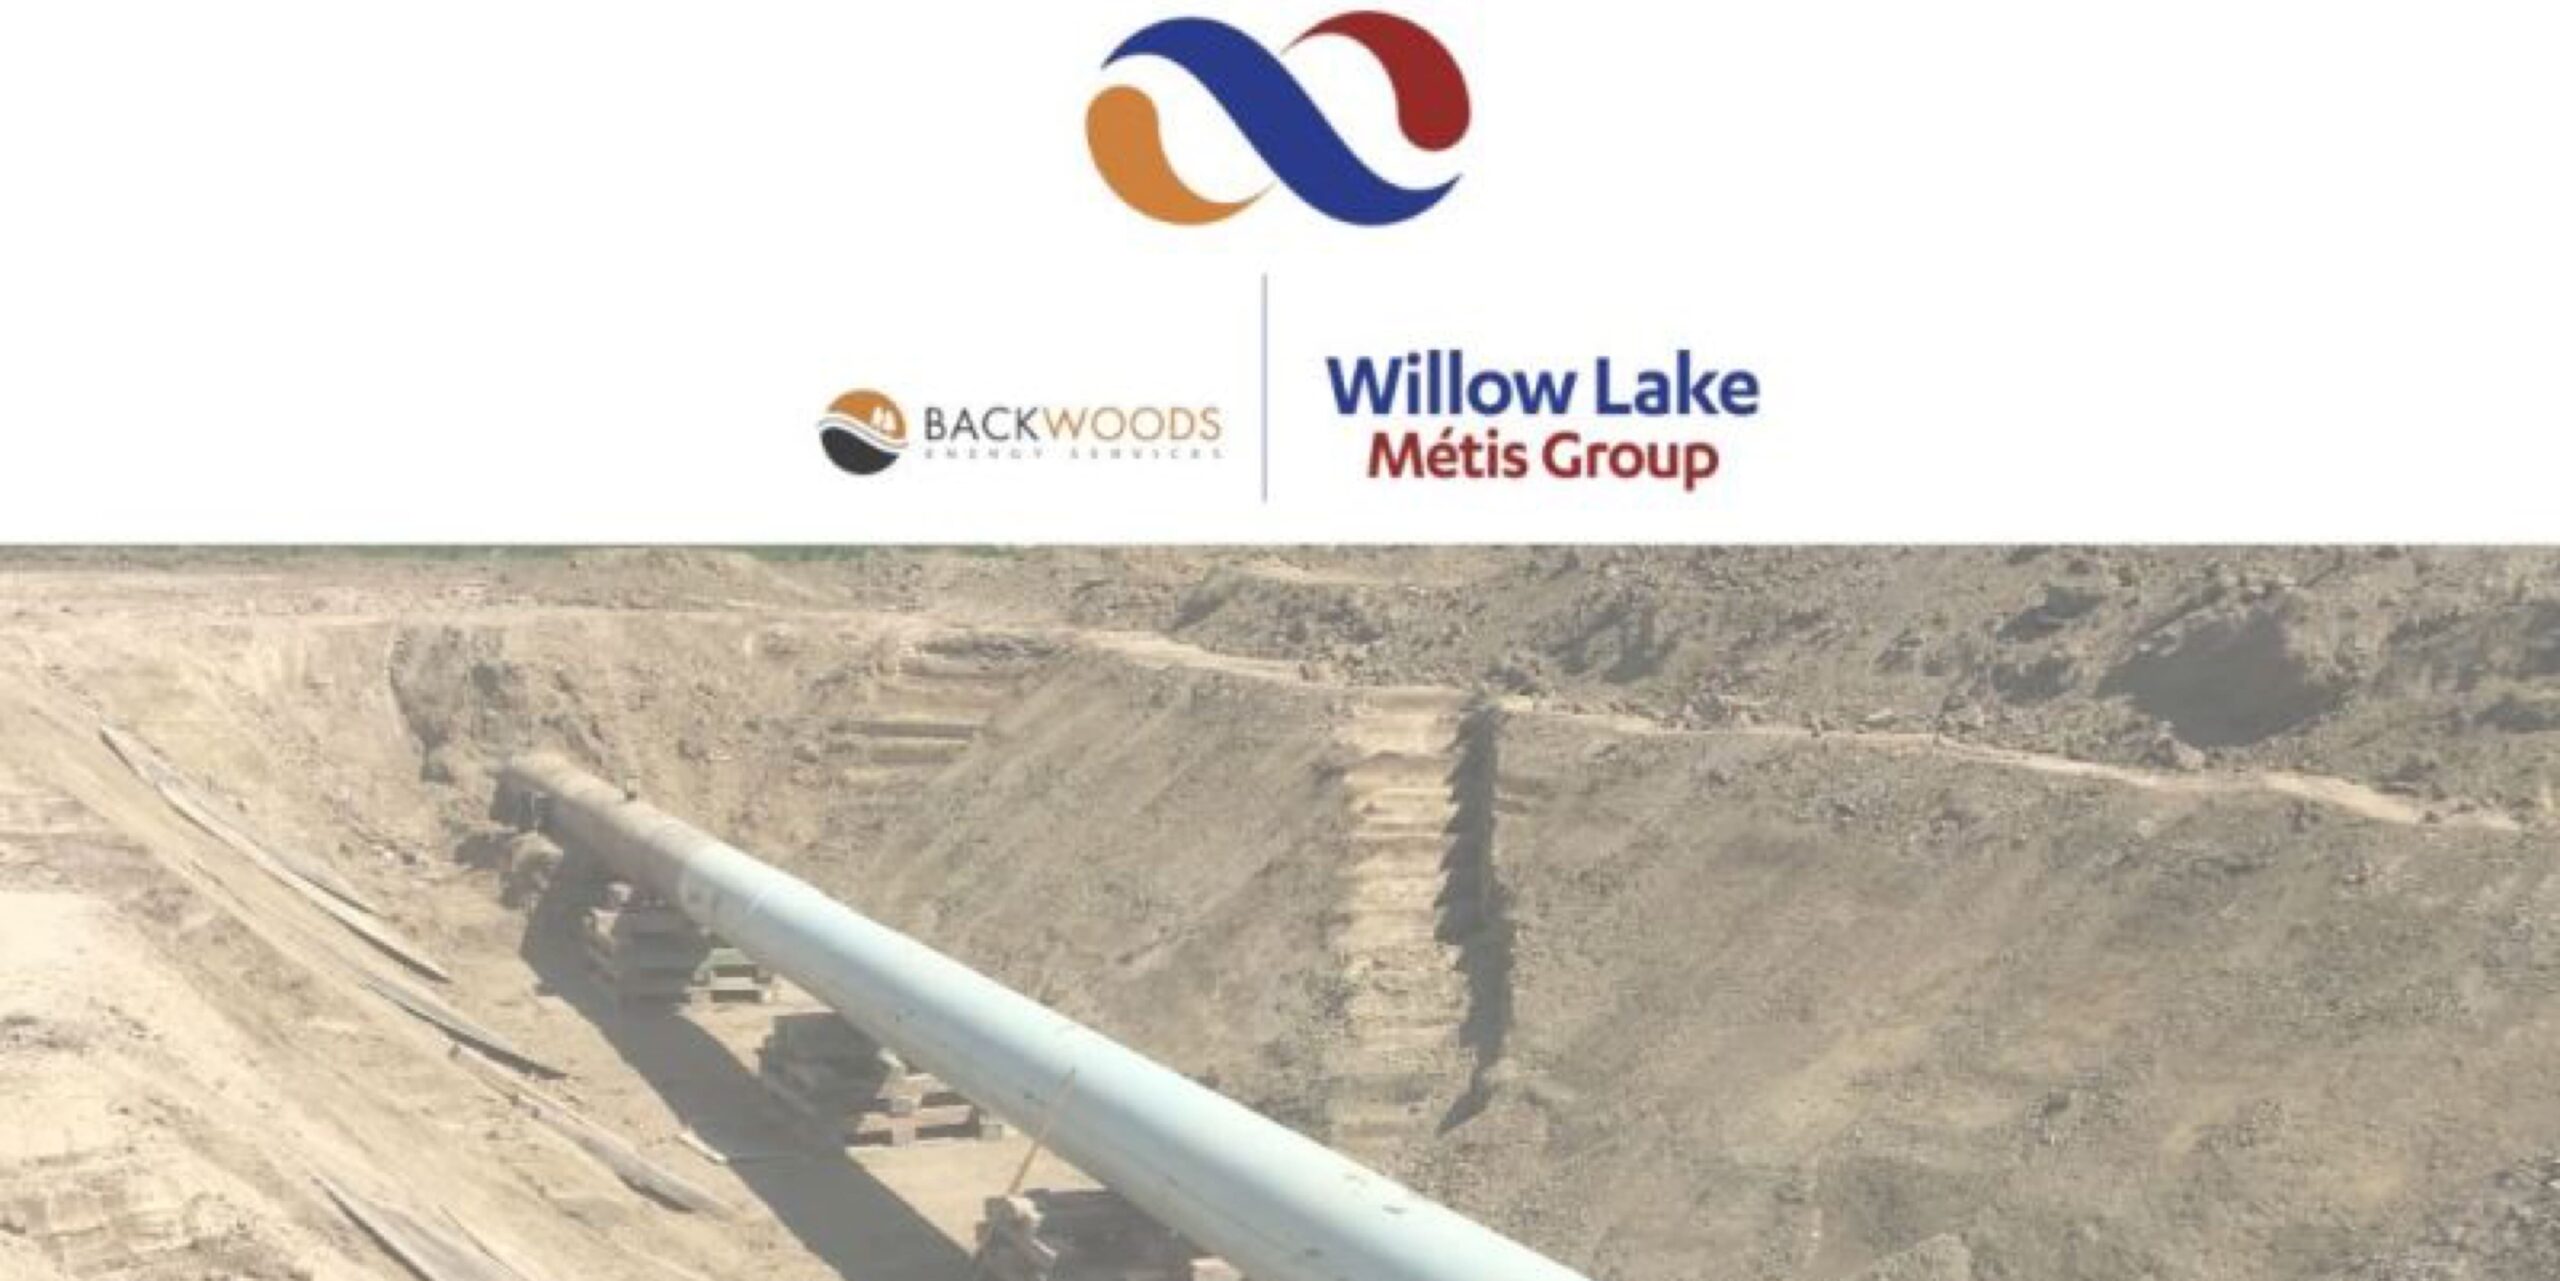 Willow Lake Métis Group/Backwoods Energy